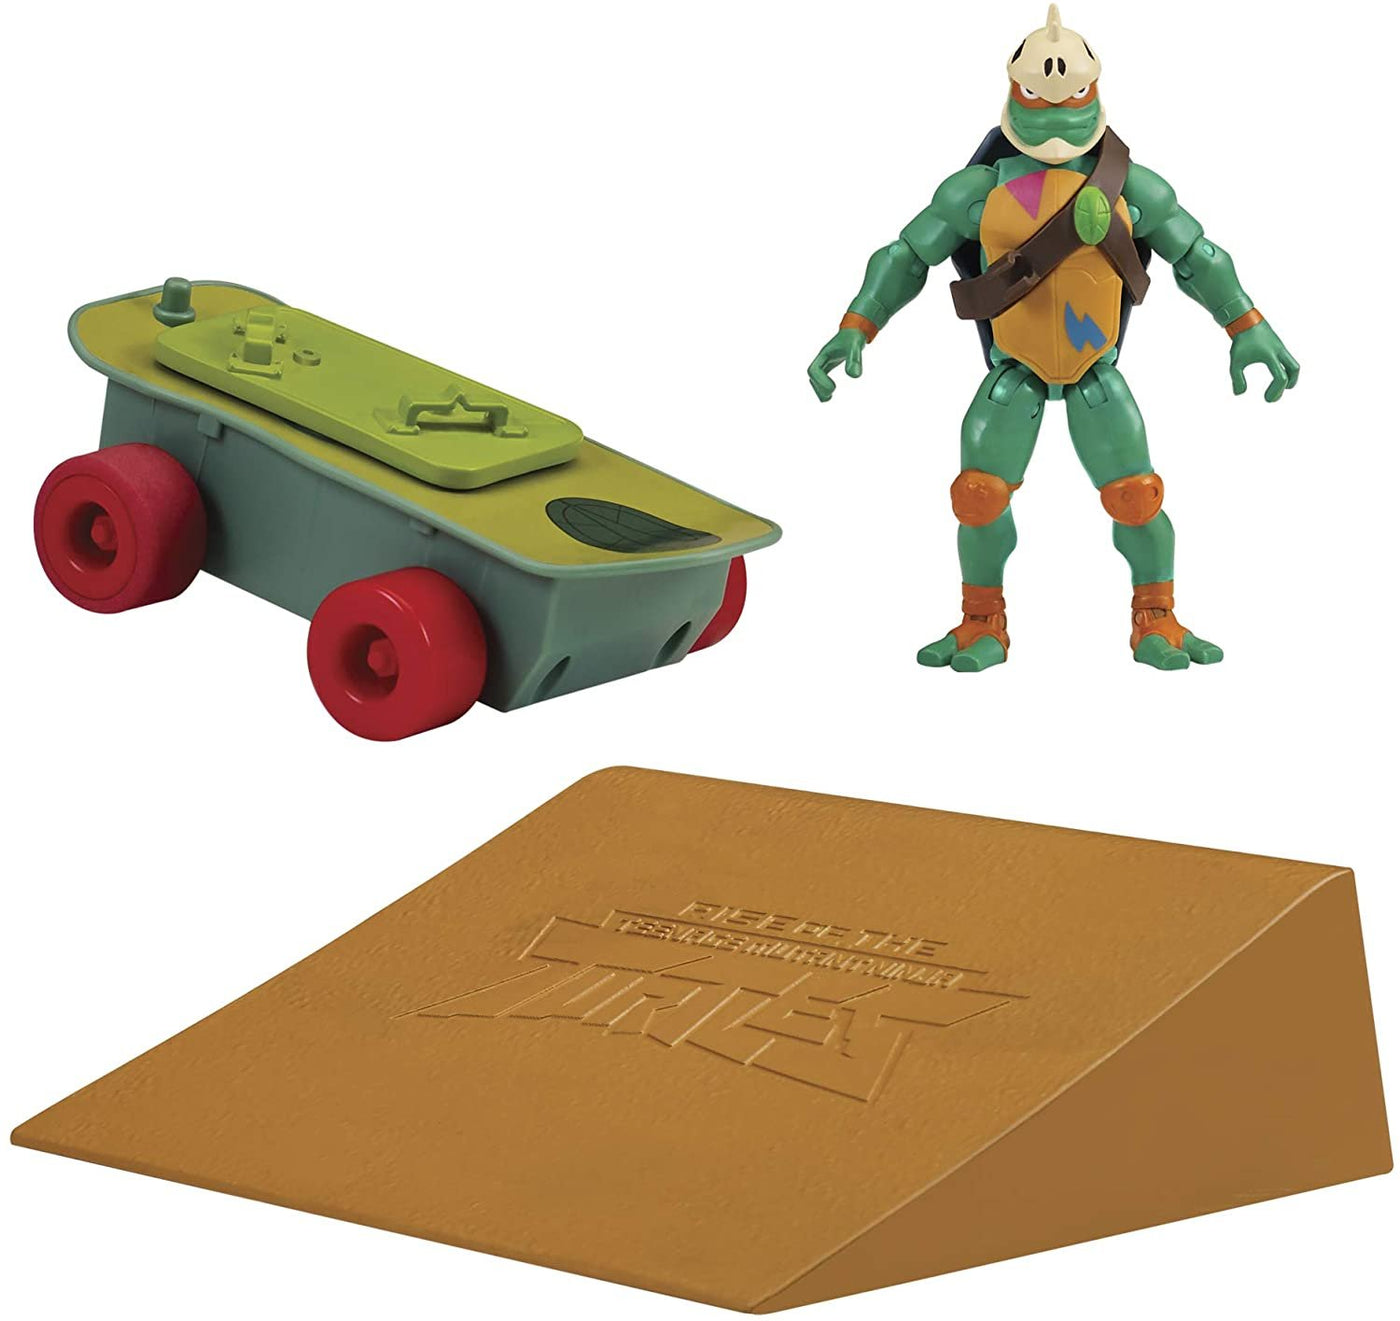 Rise of the Teenage Mutant Ninja Turtle Skateboard Vehicle with Michelangelo Figure (Nickelodeon)